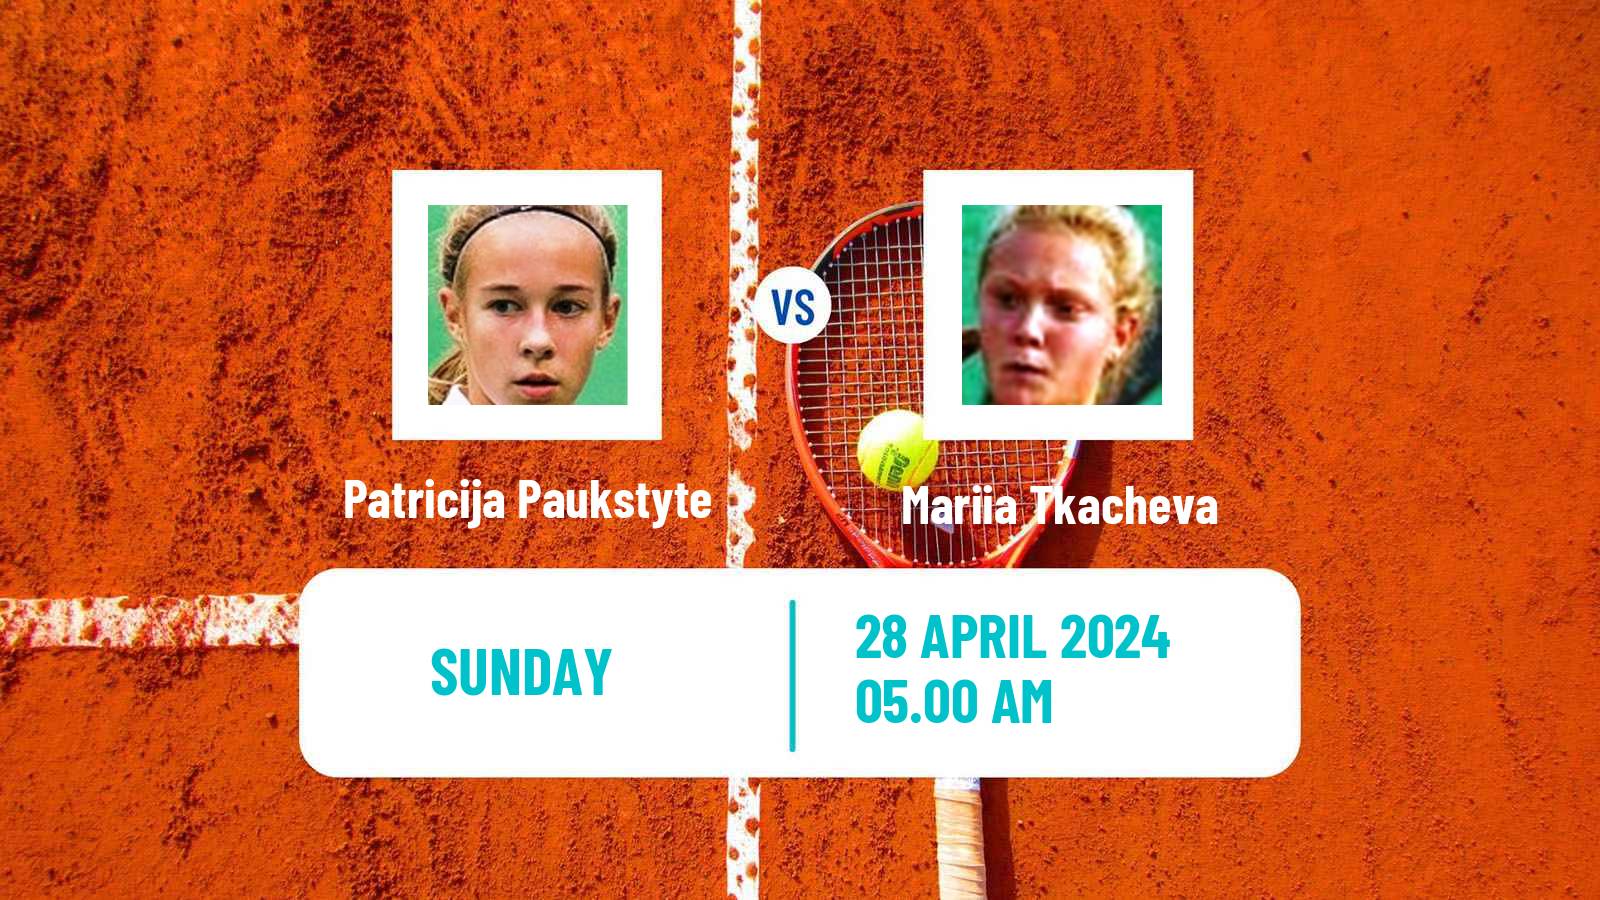 Tennis ITF W15 Monastir 15 Women Patricija Paukstyte - Mariia Tkacheva